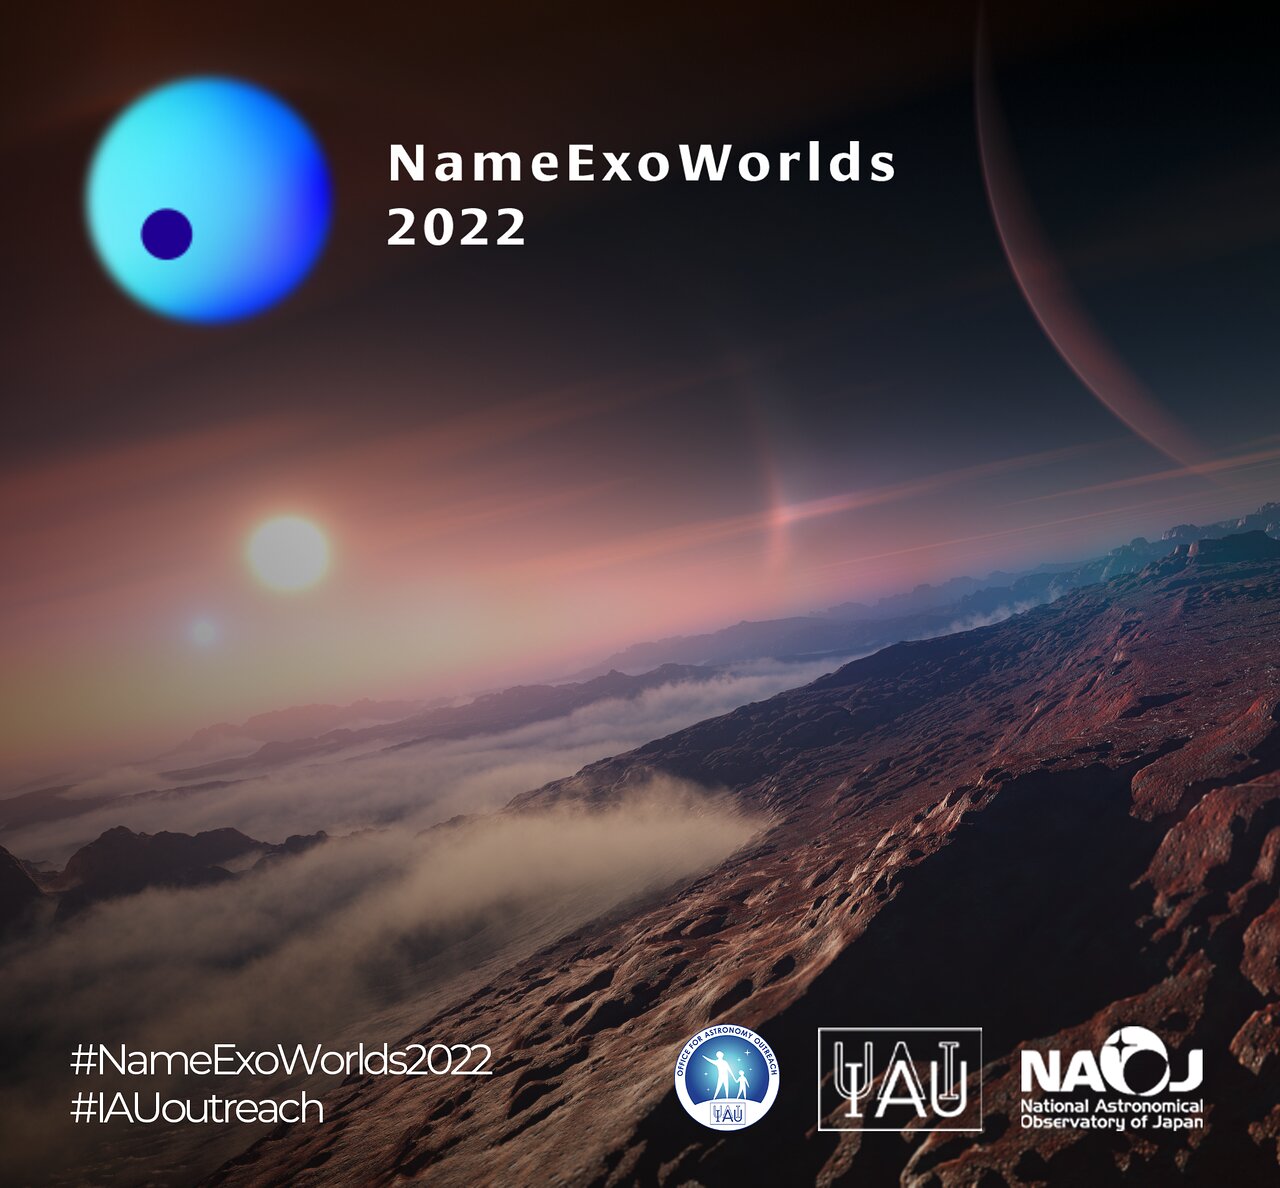 NameExoWorlds2022 teaser